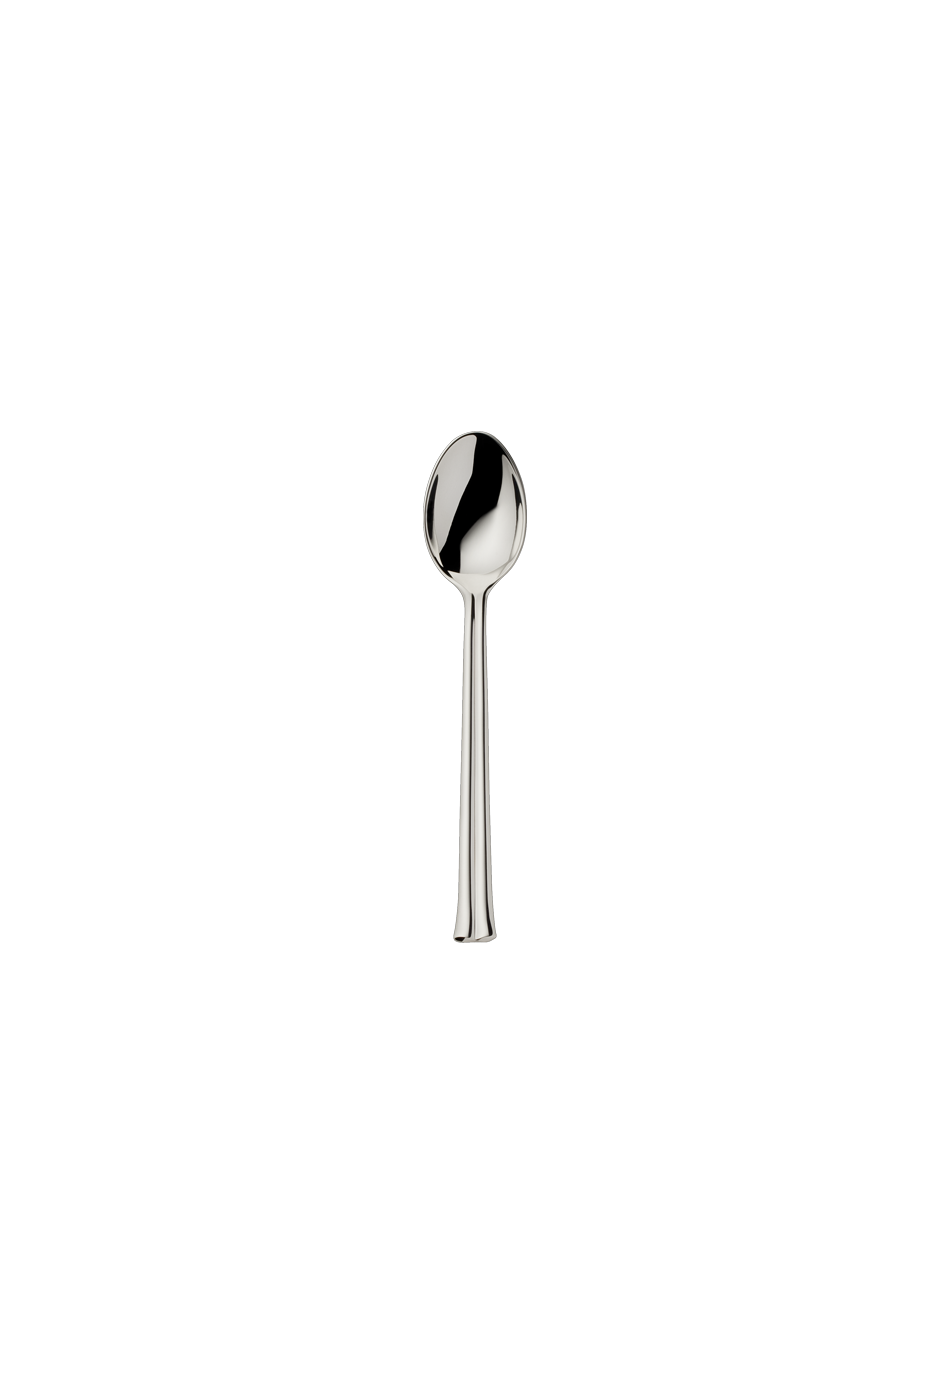 Viva Mocha Spoon 10,5 Cm (150g massive silverplated)